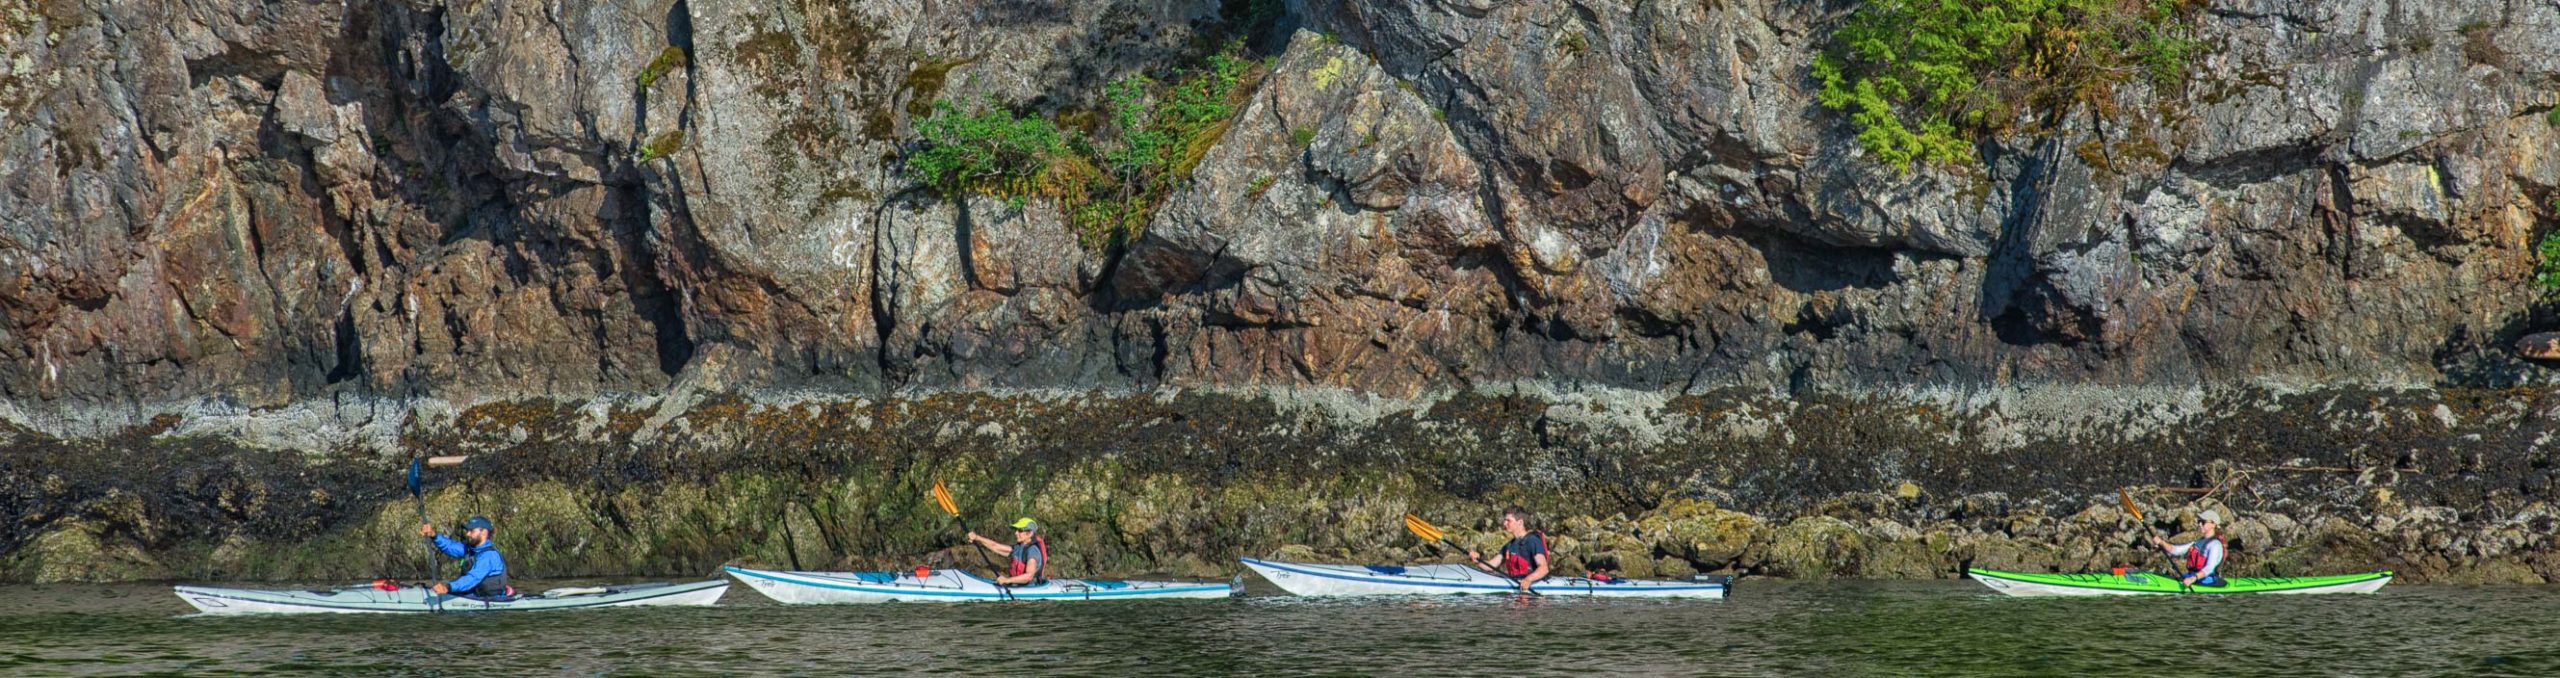 Group of kayakers along a rock face